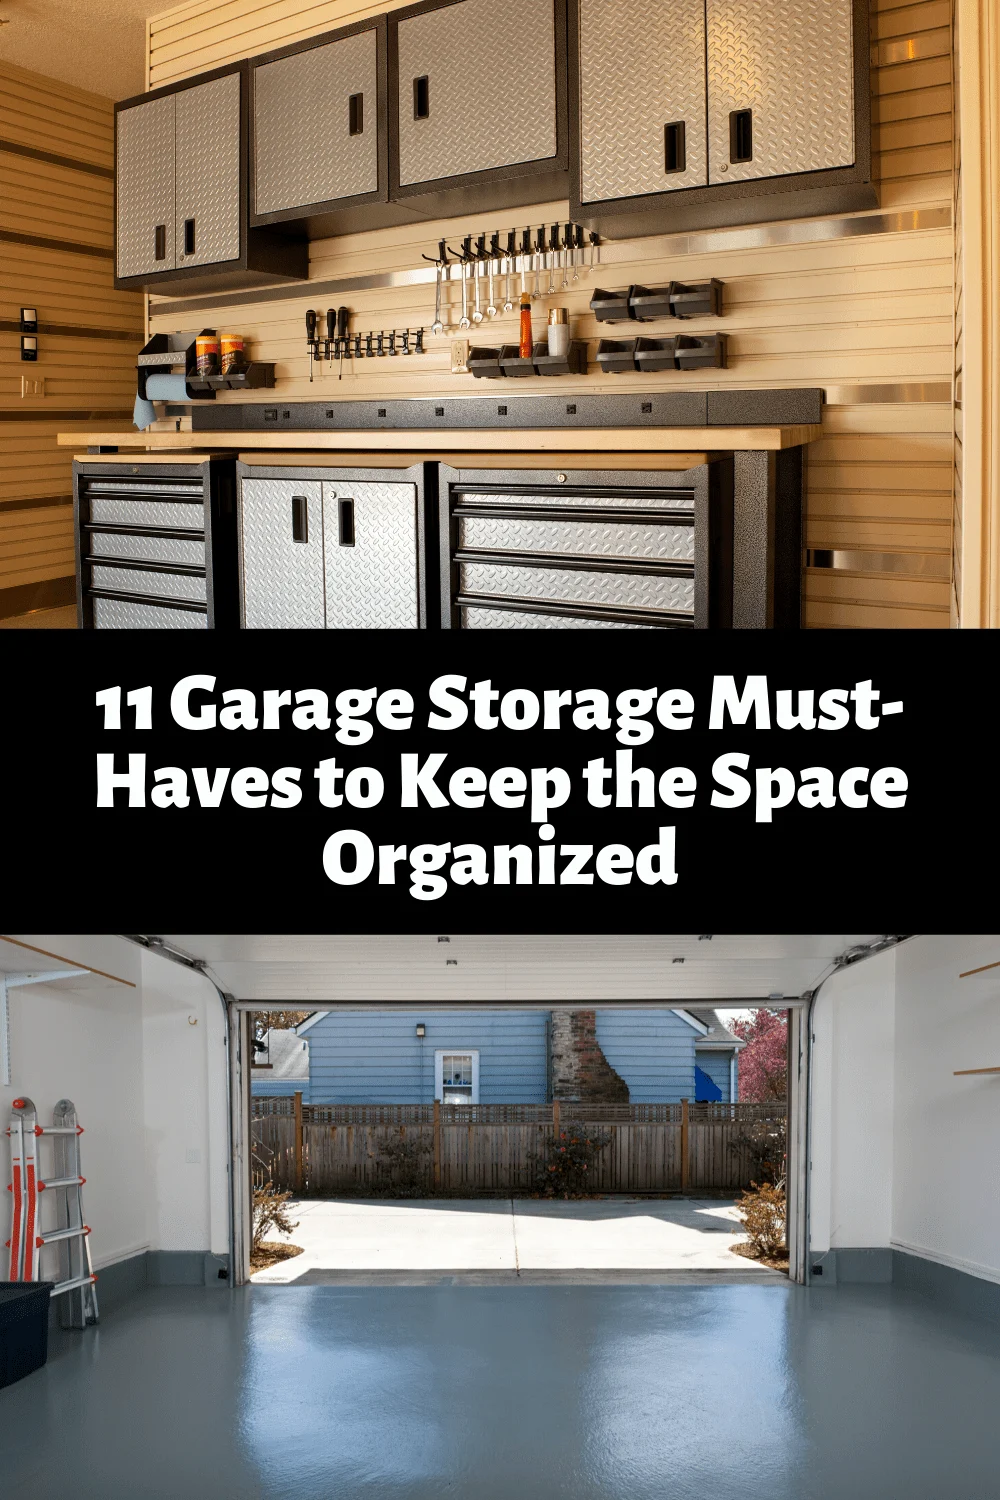 Adventures in DIY: Garage Organization: Inside the Cabinets